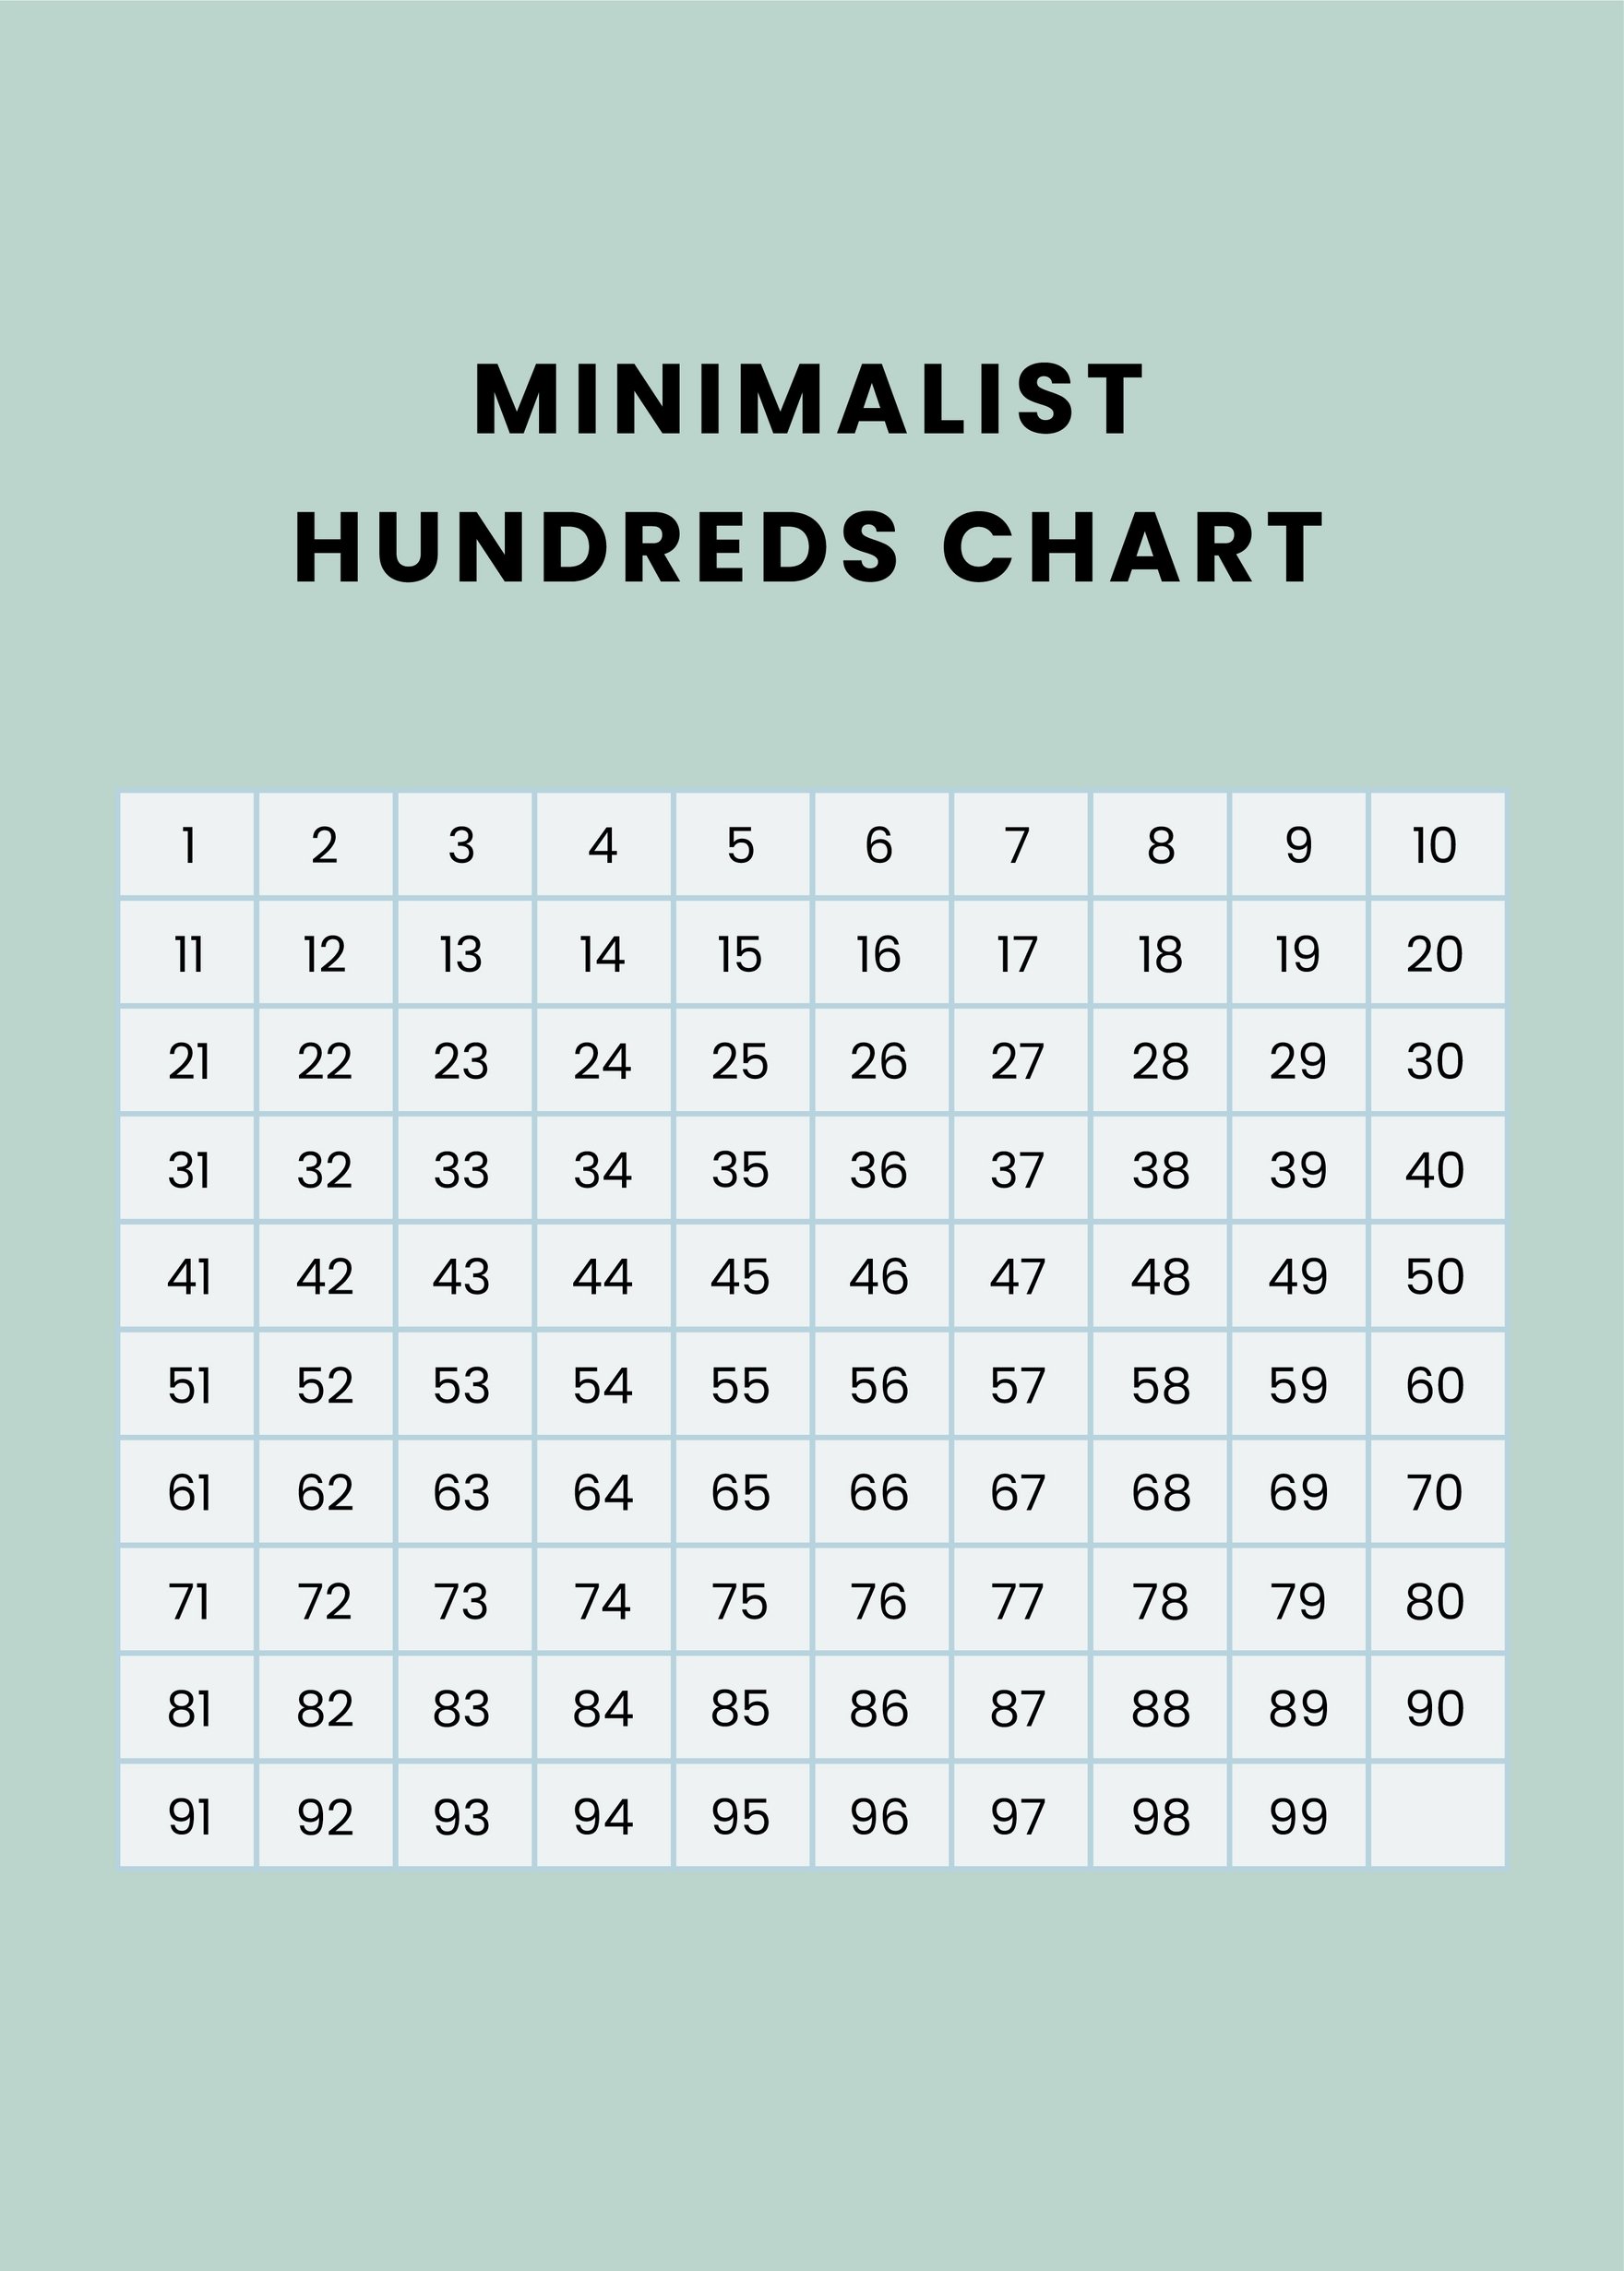 Minimalist Hundreds Chart